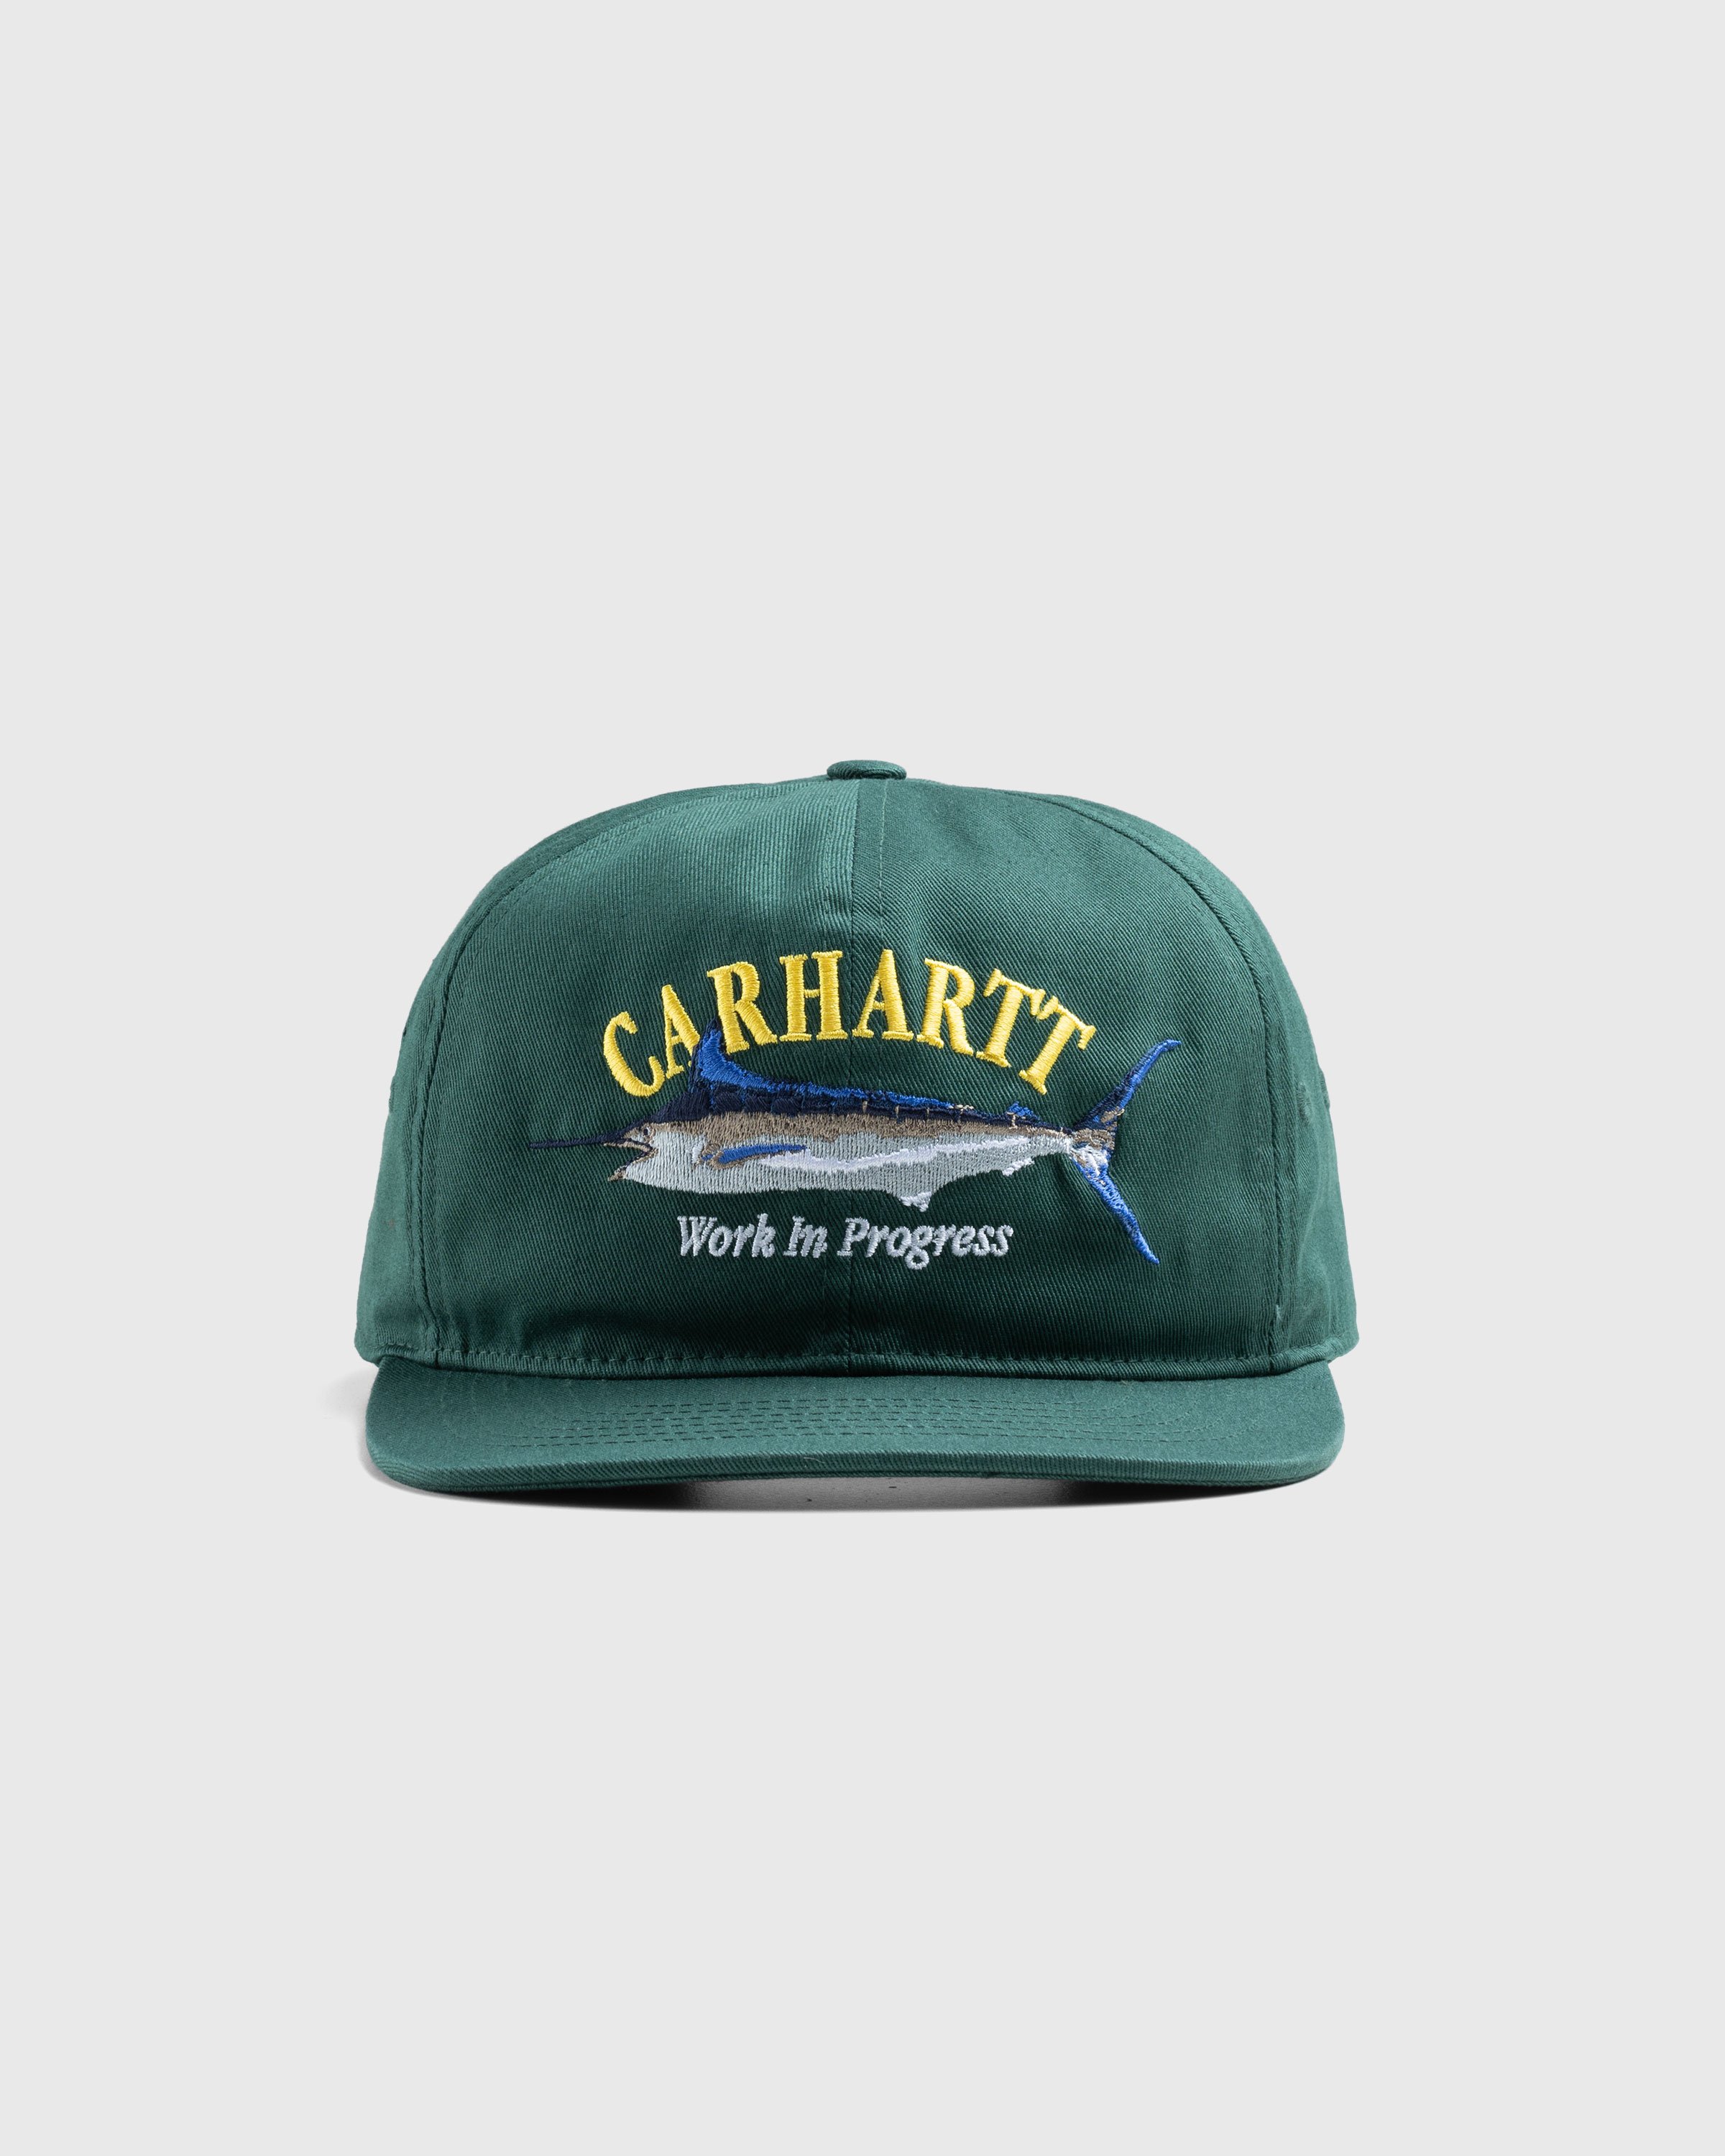 Carhartt WIP - Marlin Cap Treehouse Green - Accessories - Green - Image 2